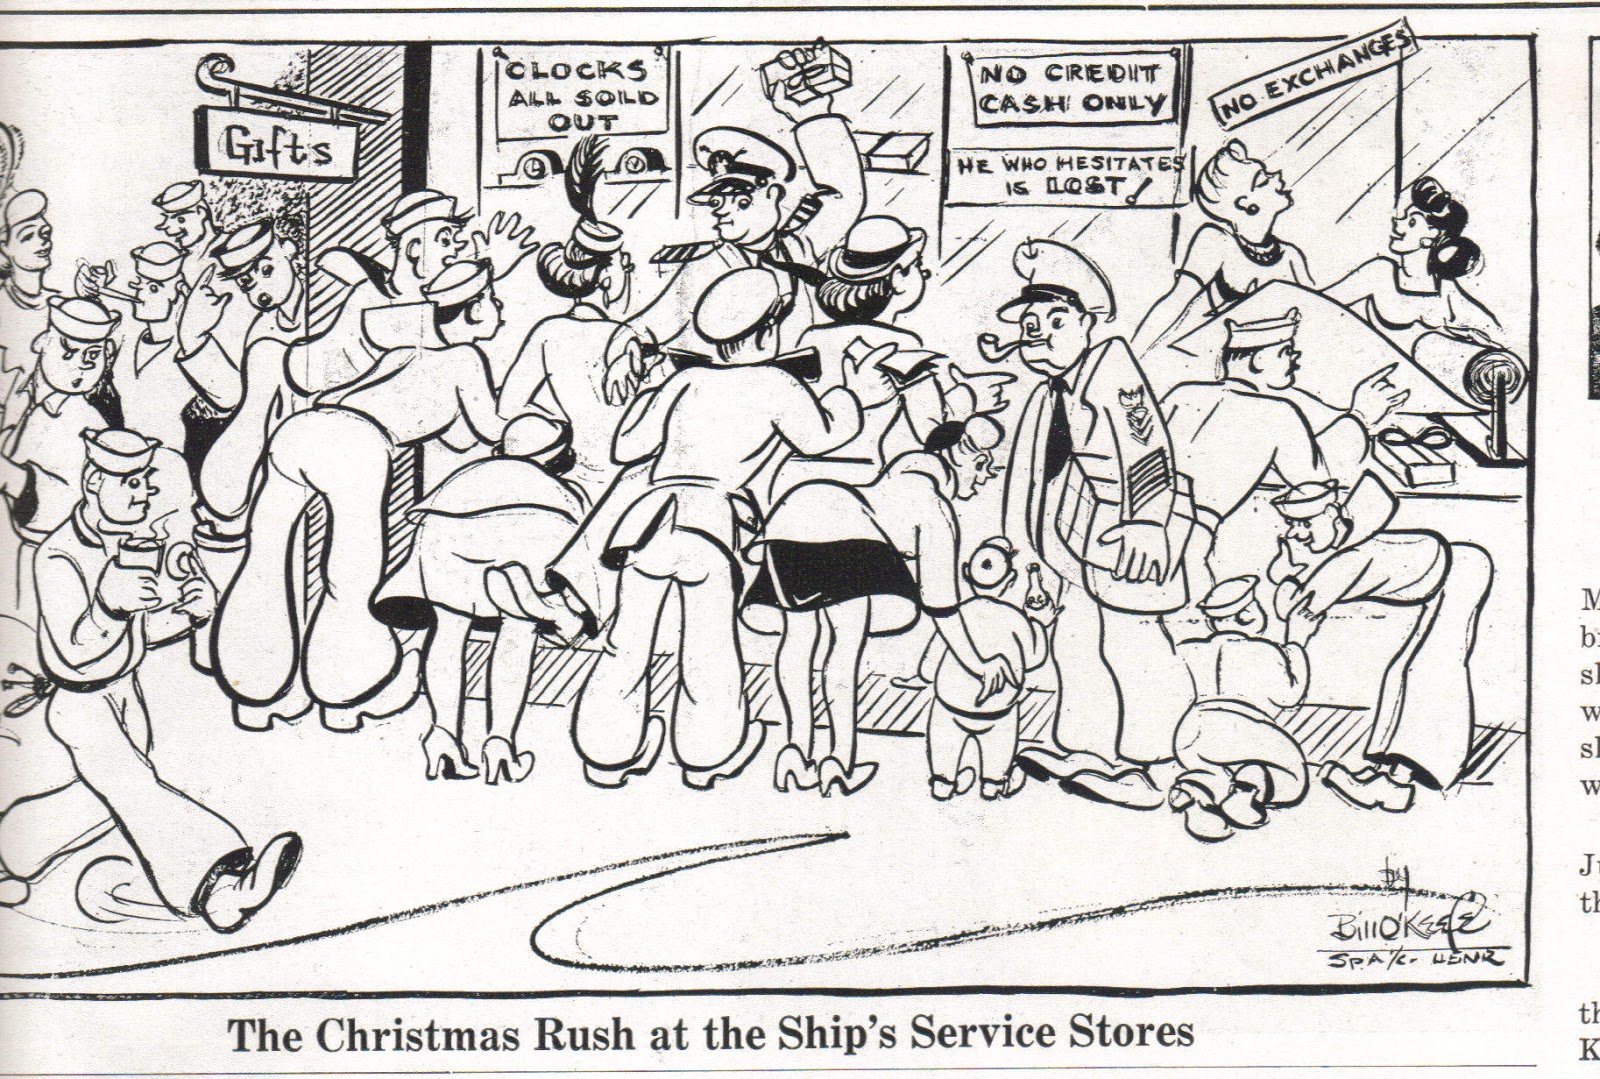 http://2.bp.blogspot.com/-Eyl6CT_zCWI/UNSDCrScb7I/AAAAAAAACo8/Usgu_kkkyjw/s1600/1944+Christmas+Rush+at+Ships+Service+Stores.jpg